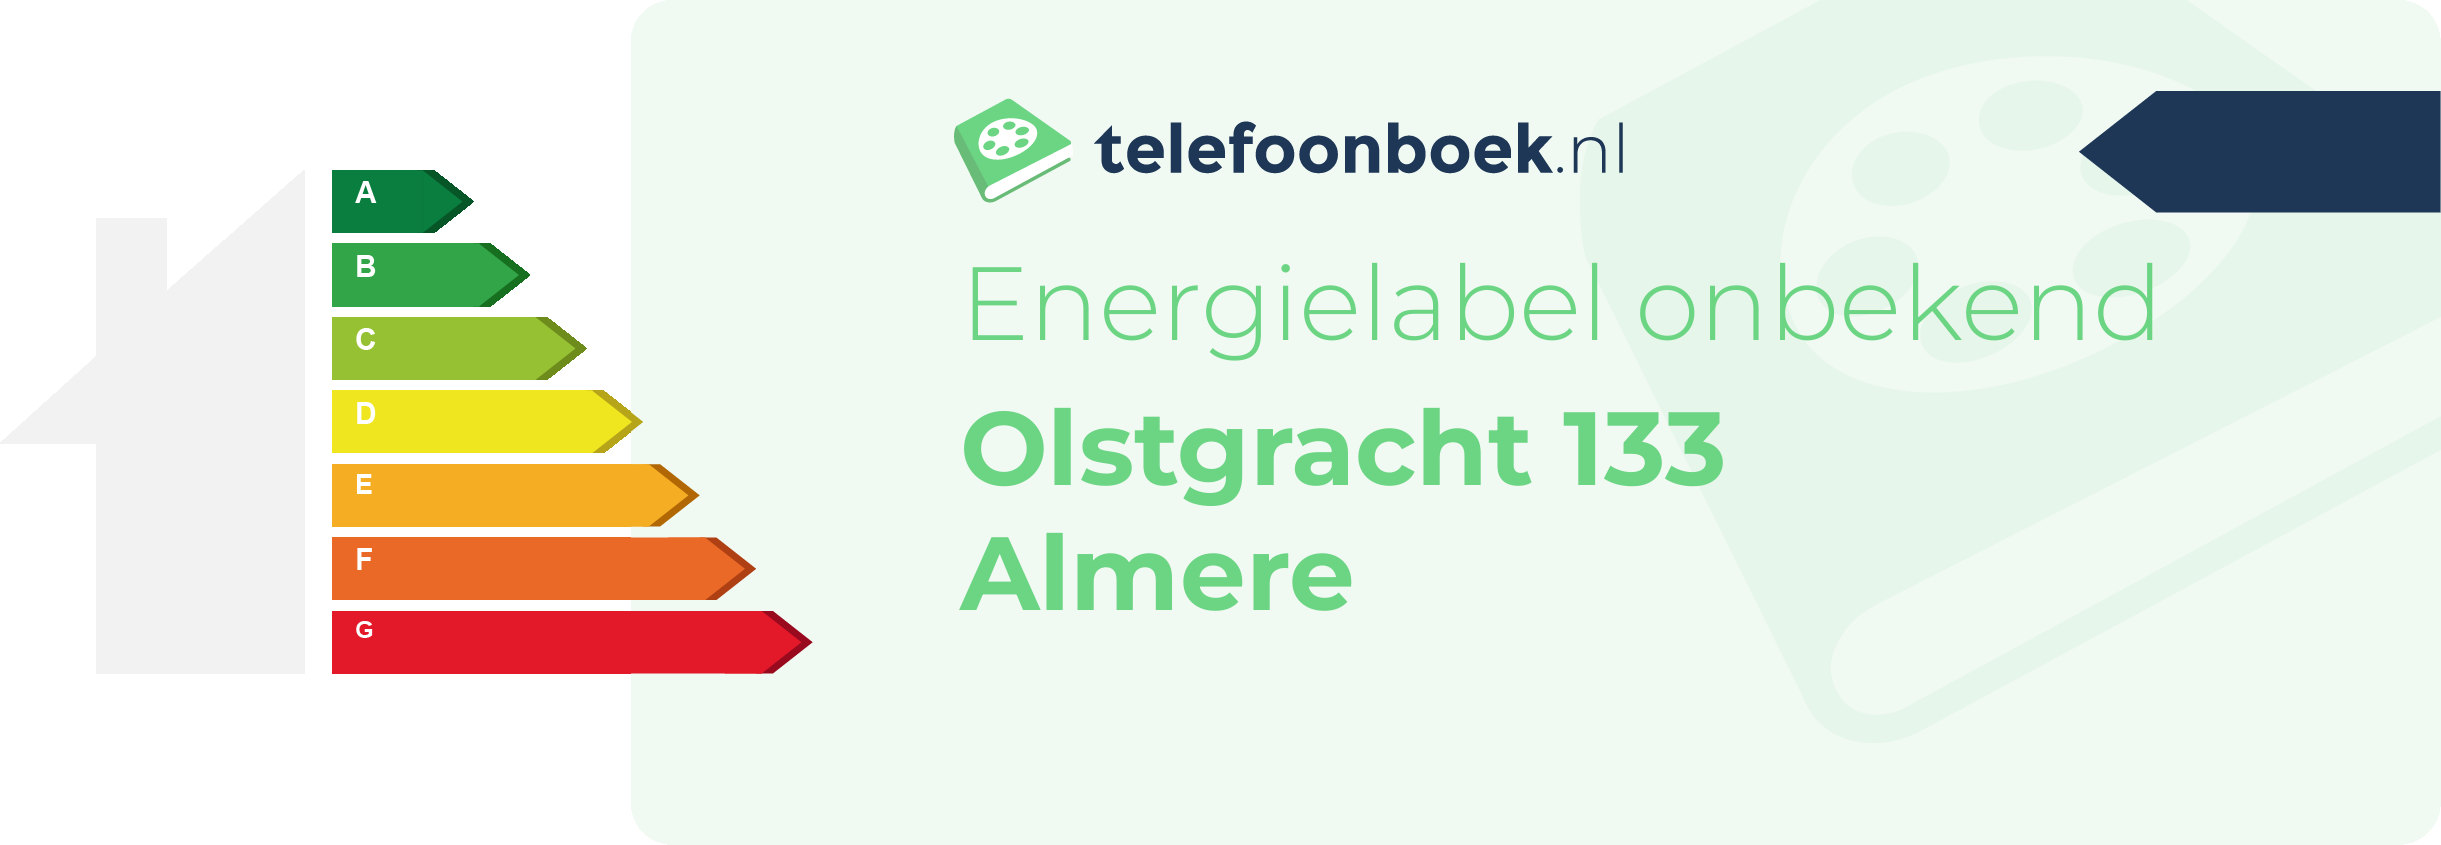 Energielabel Olstgracht 133 Almere